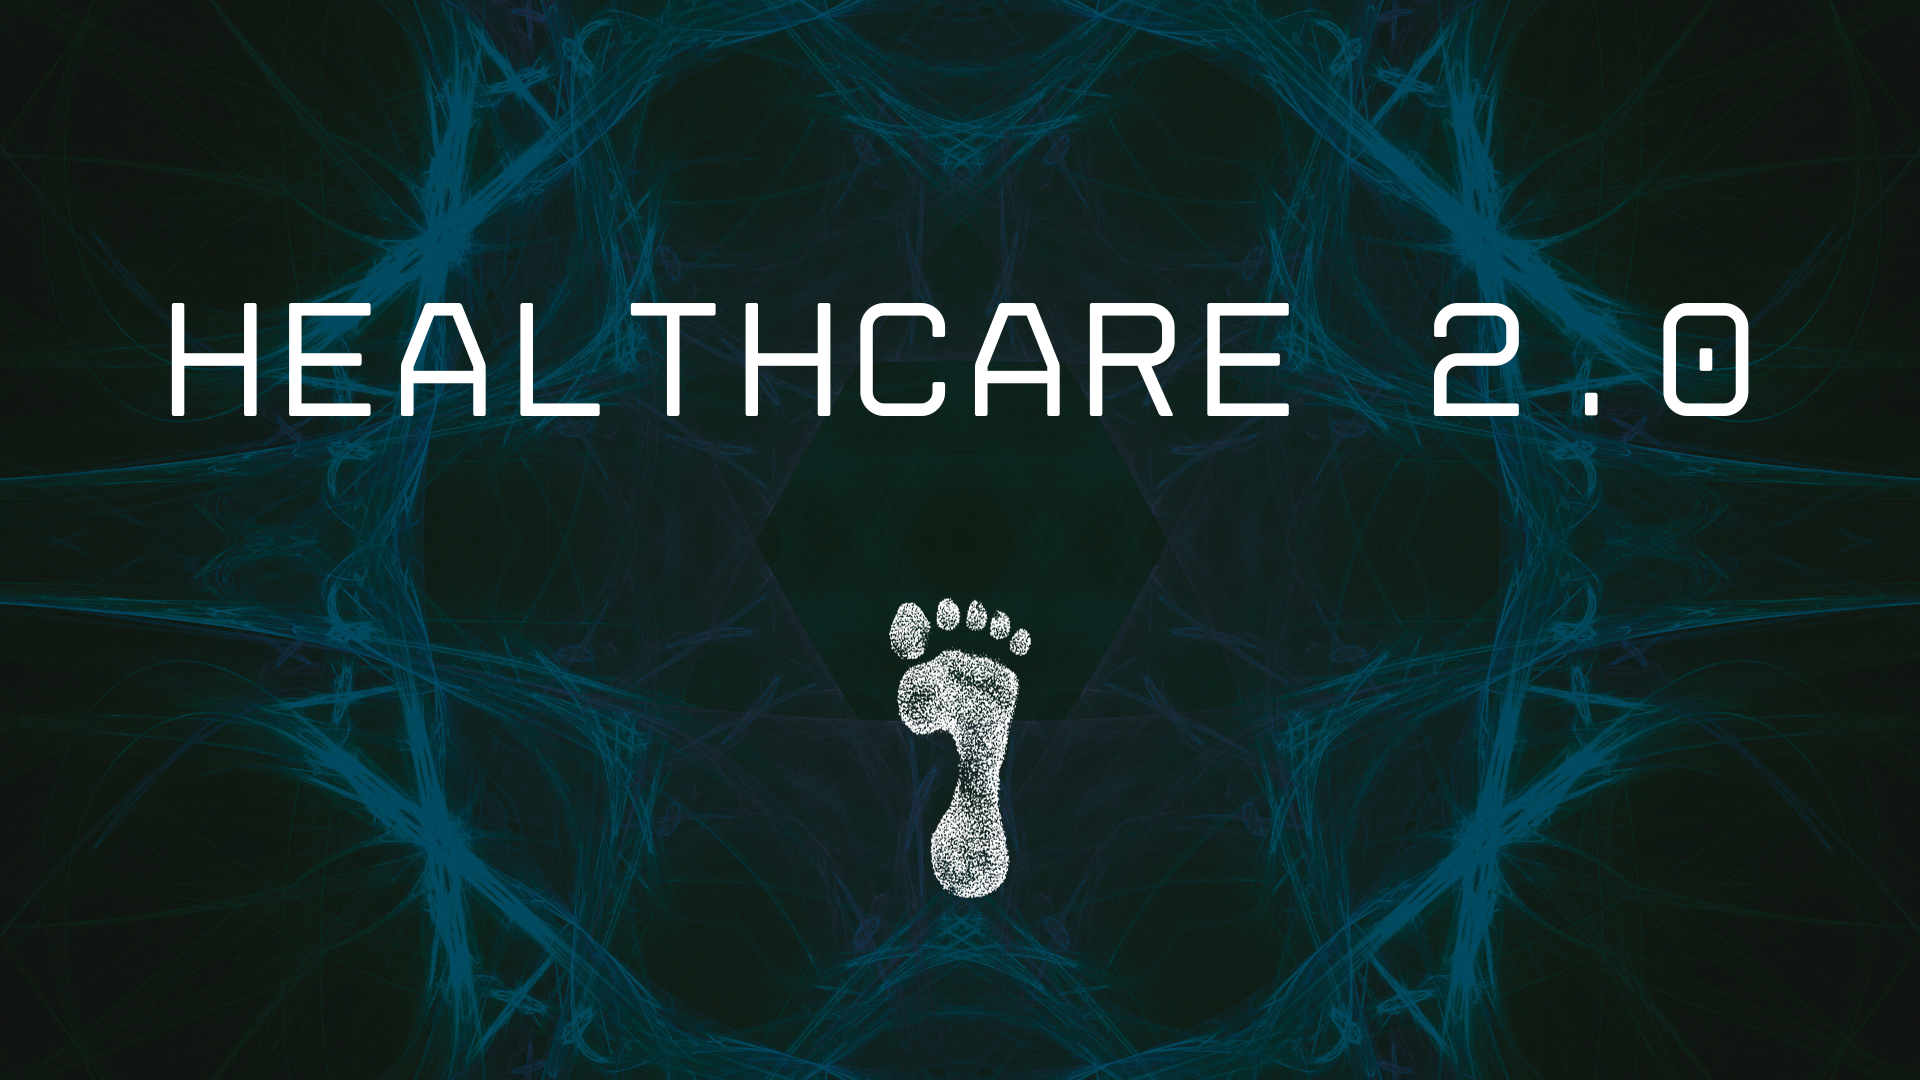 Healthcare 2.0